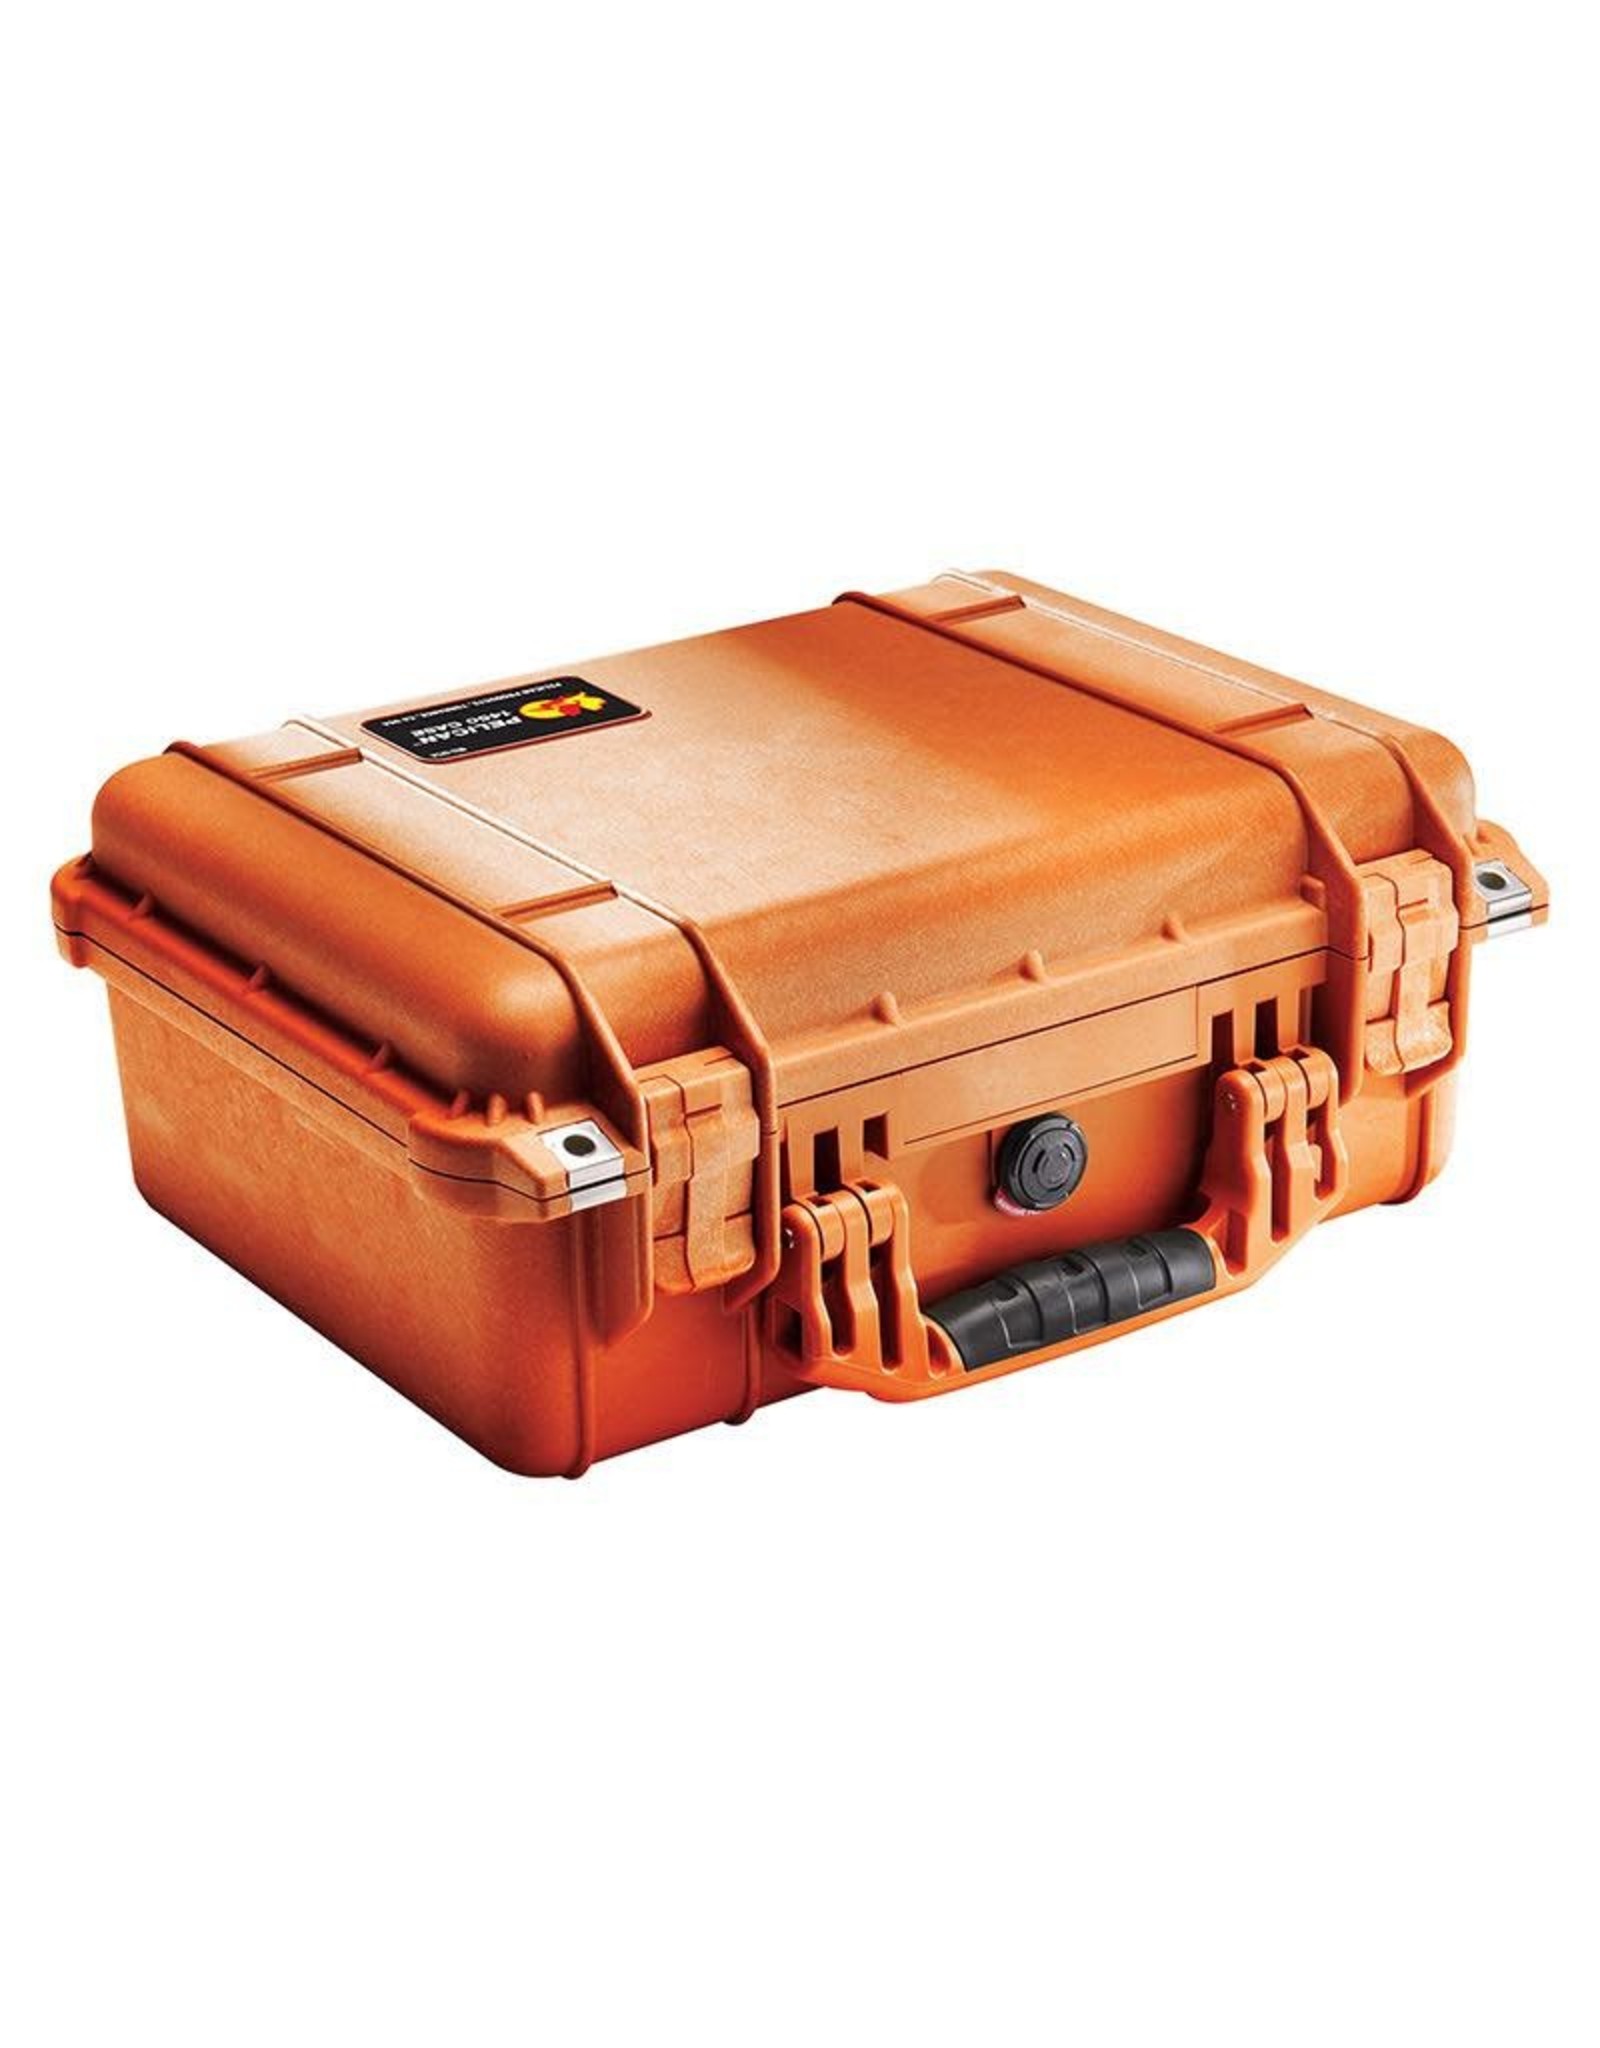 Pelican Pelican 1450 Case, Orange with Foam - Open Box.